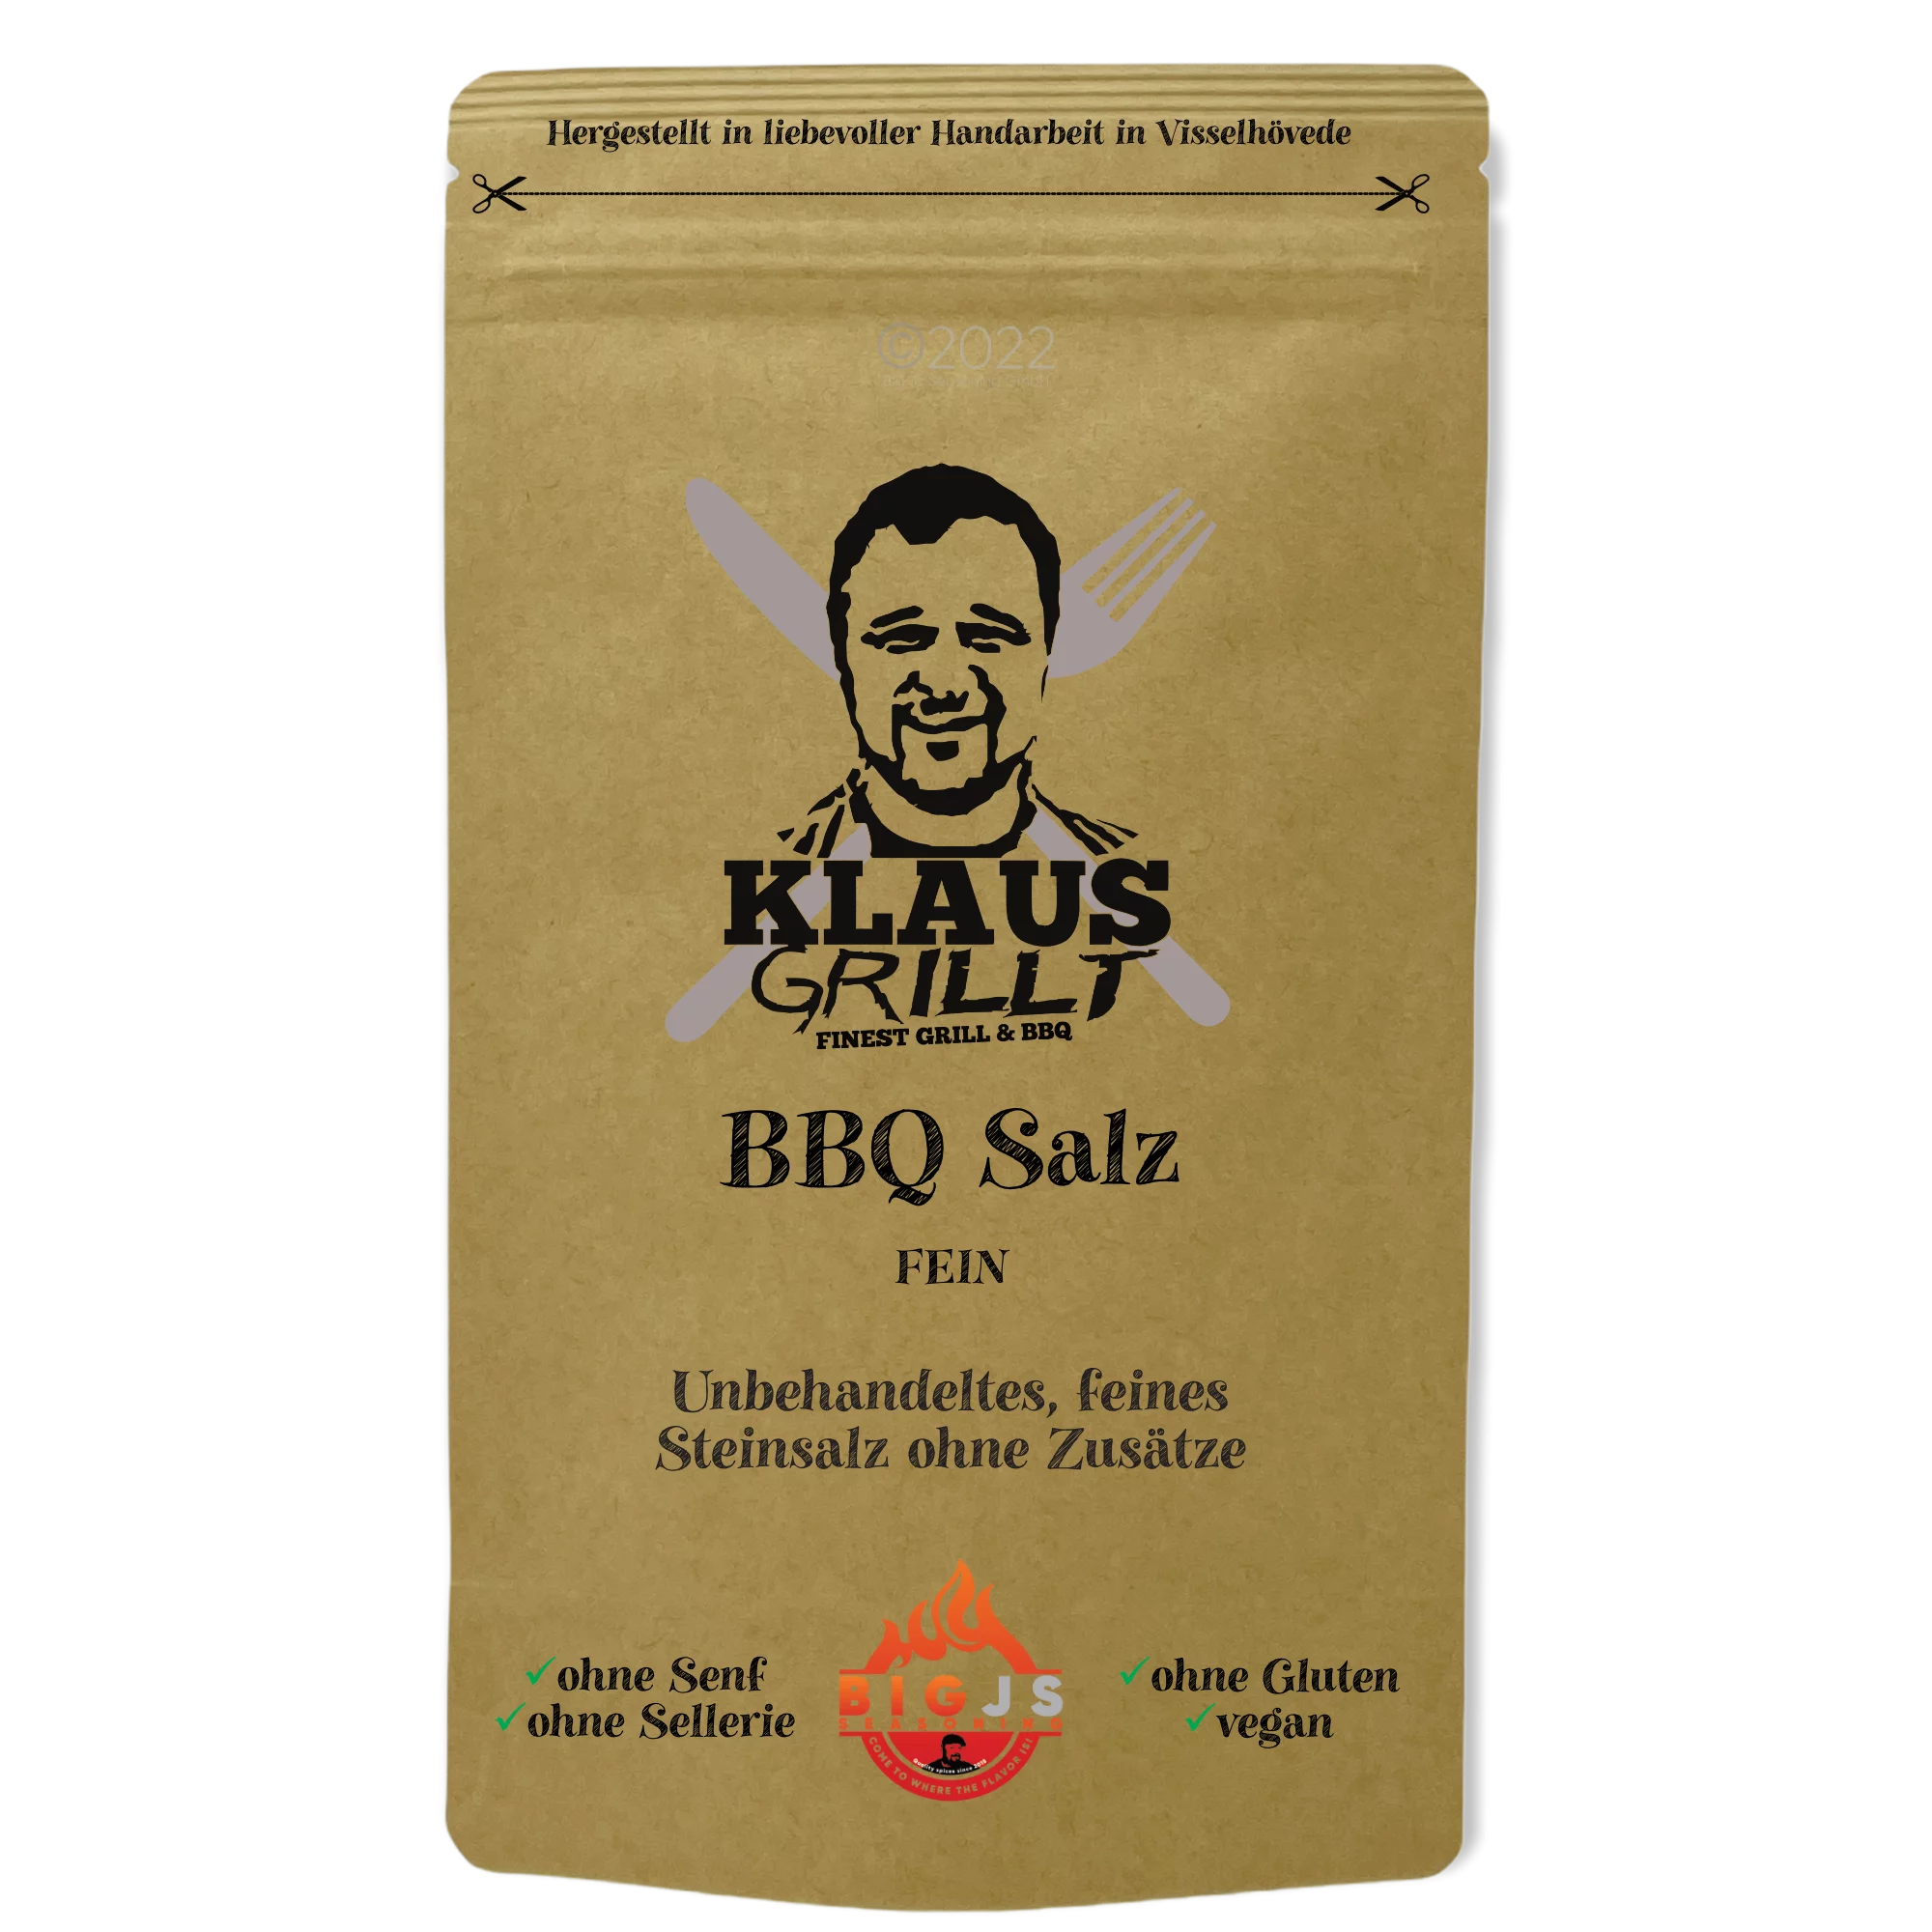 Klaus grillt, BBQ Salz fein, 450g Standbeutel